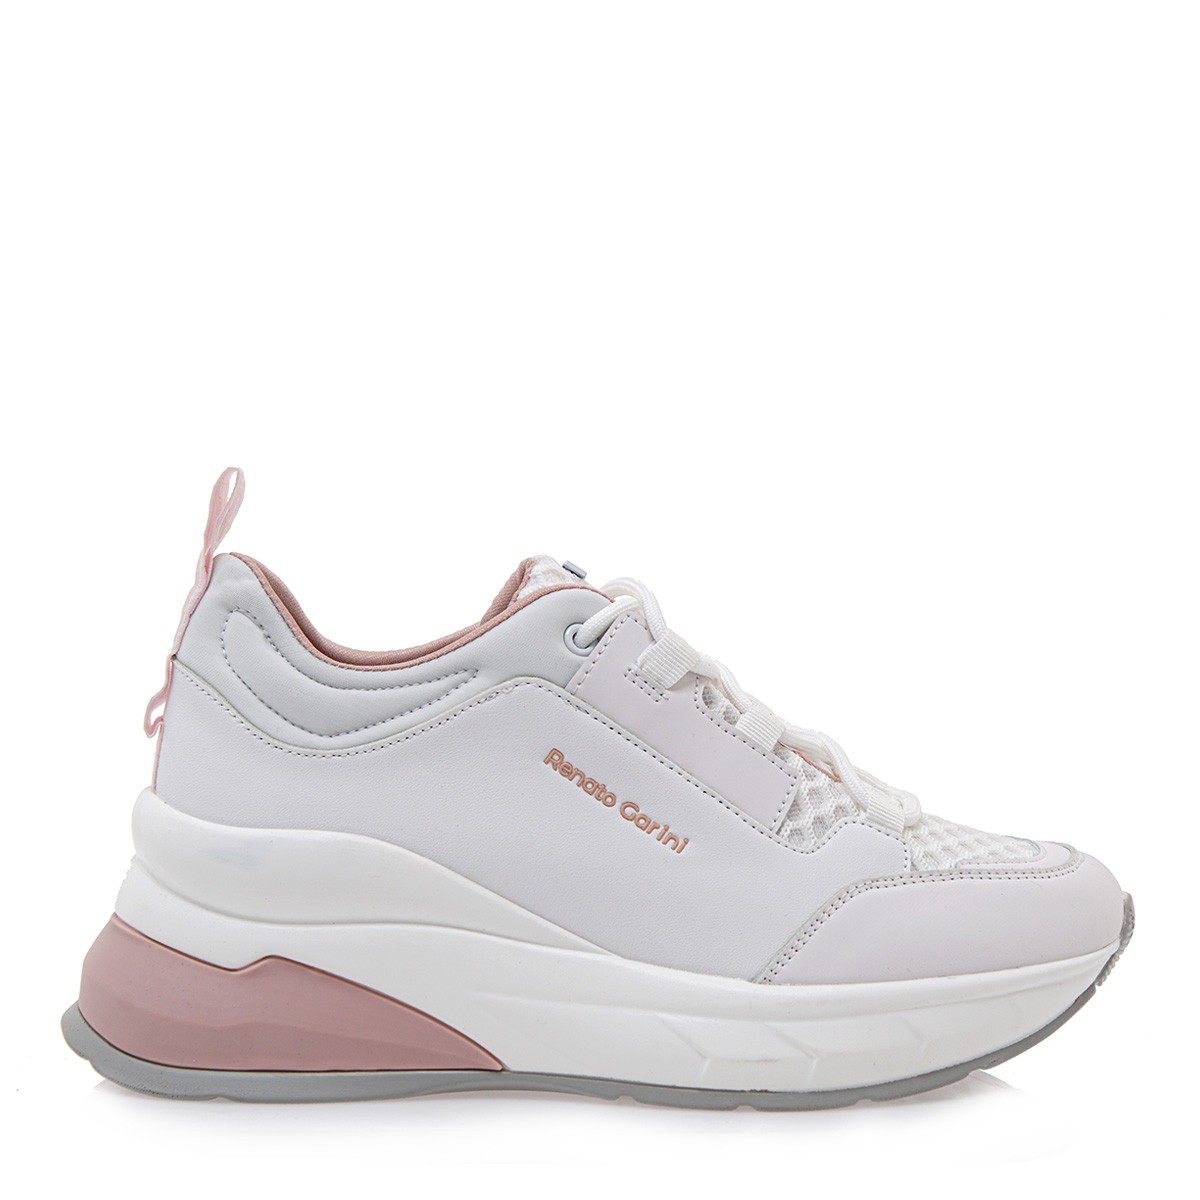 Renato Garini Γυναικεία Παπούτσια Sneakers 19R-316 Λευκό Ρόζ